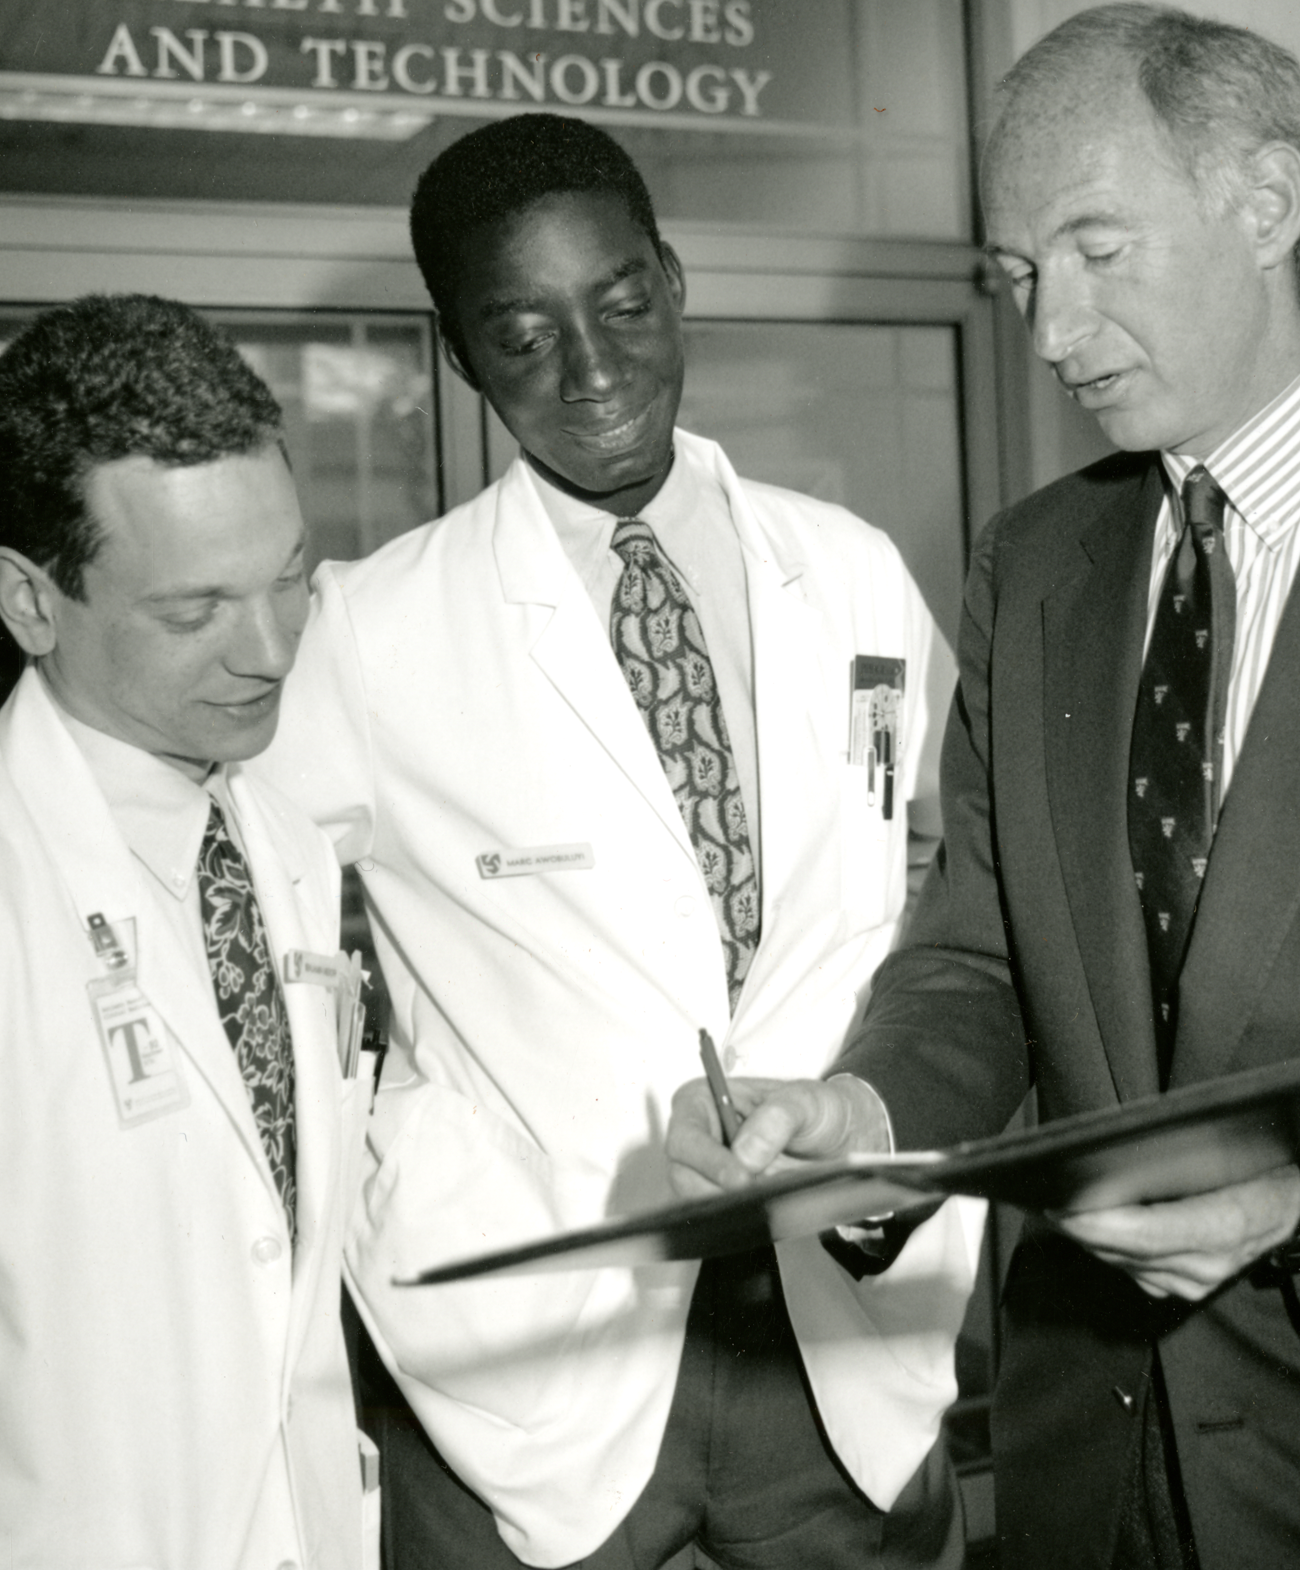 Michael Rosenblatt talks with two medical students, circa 1990s